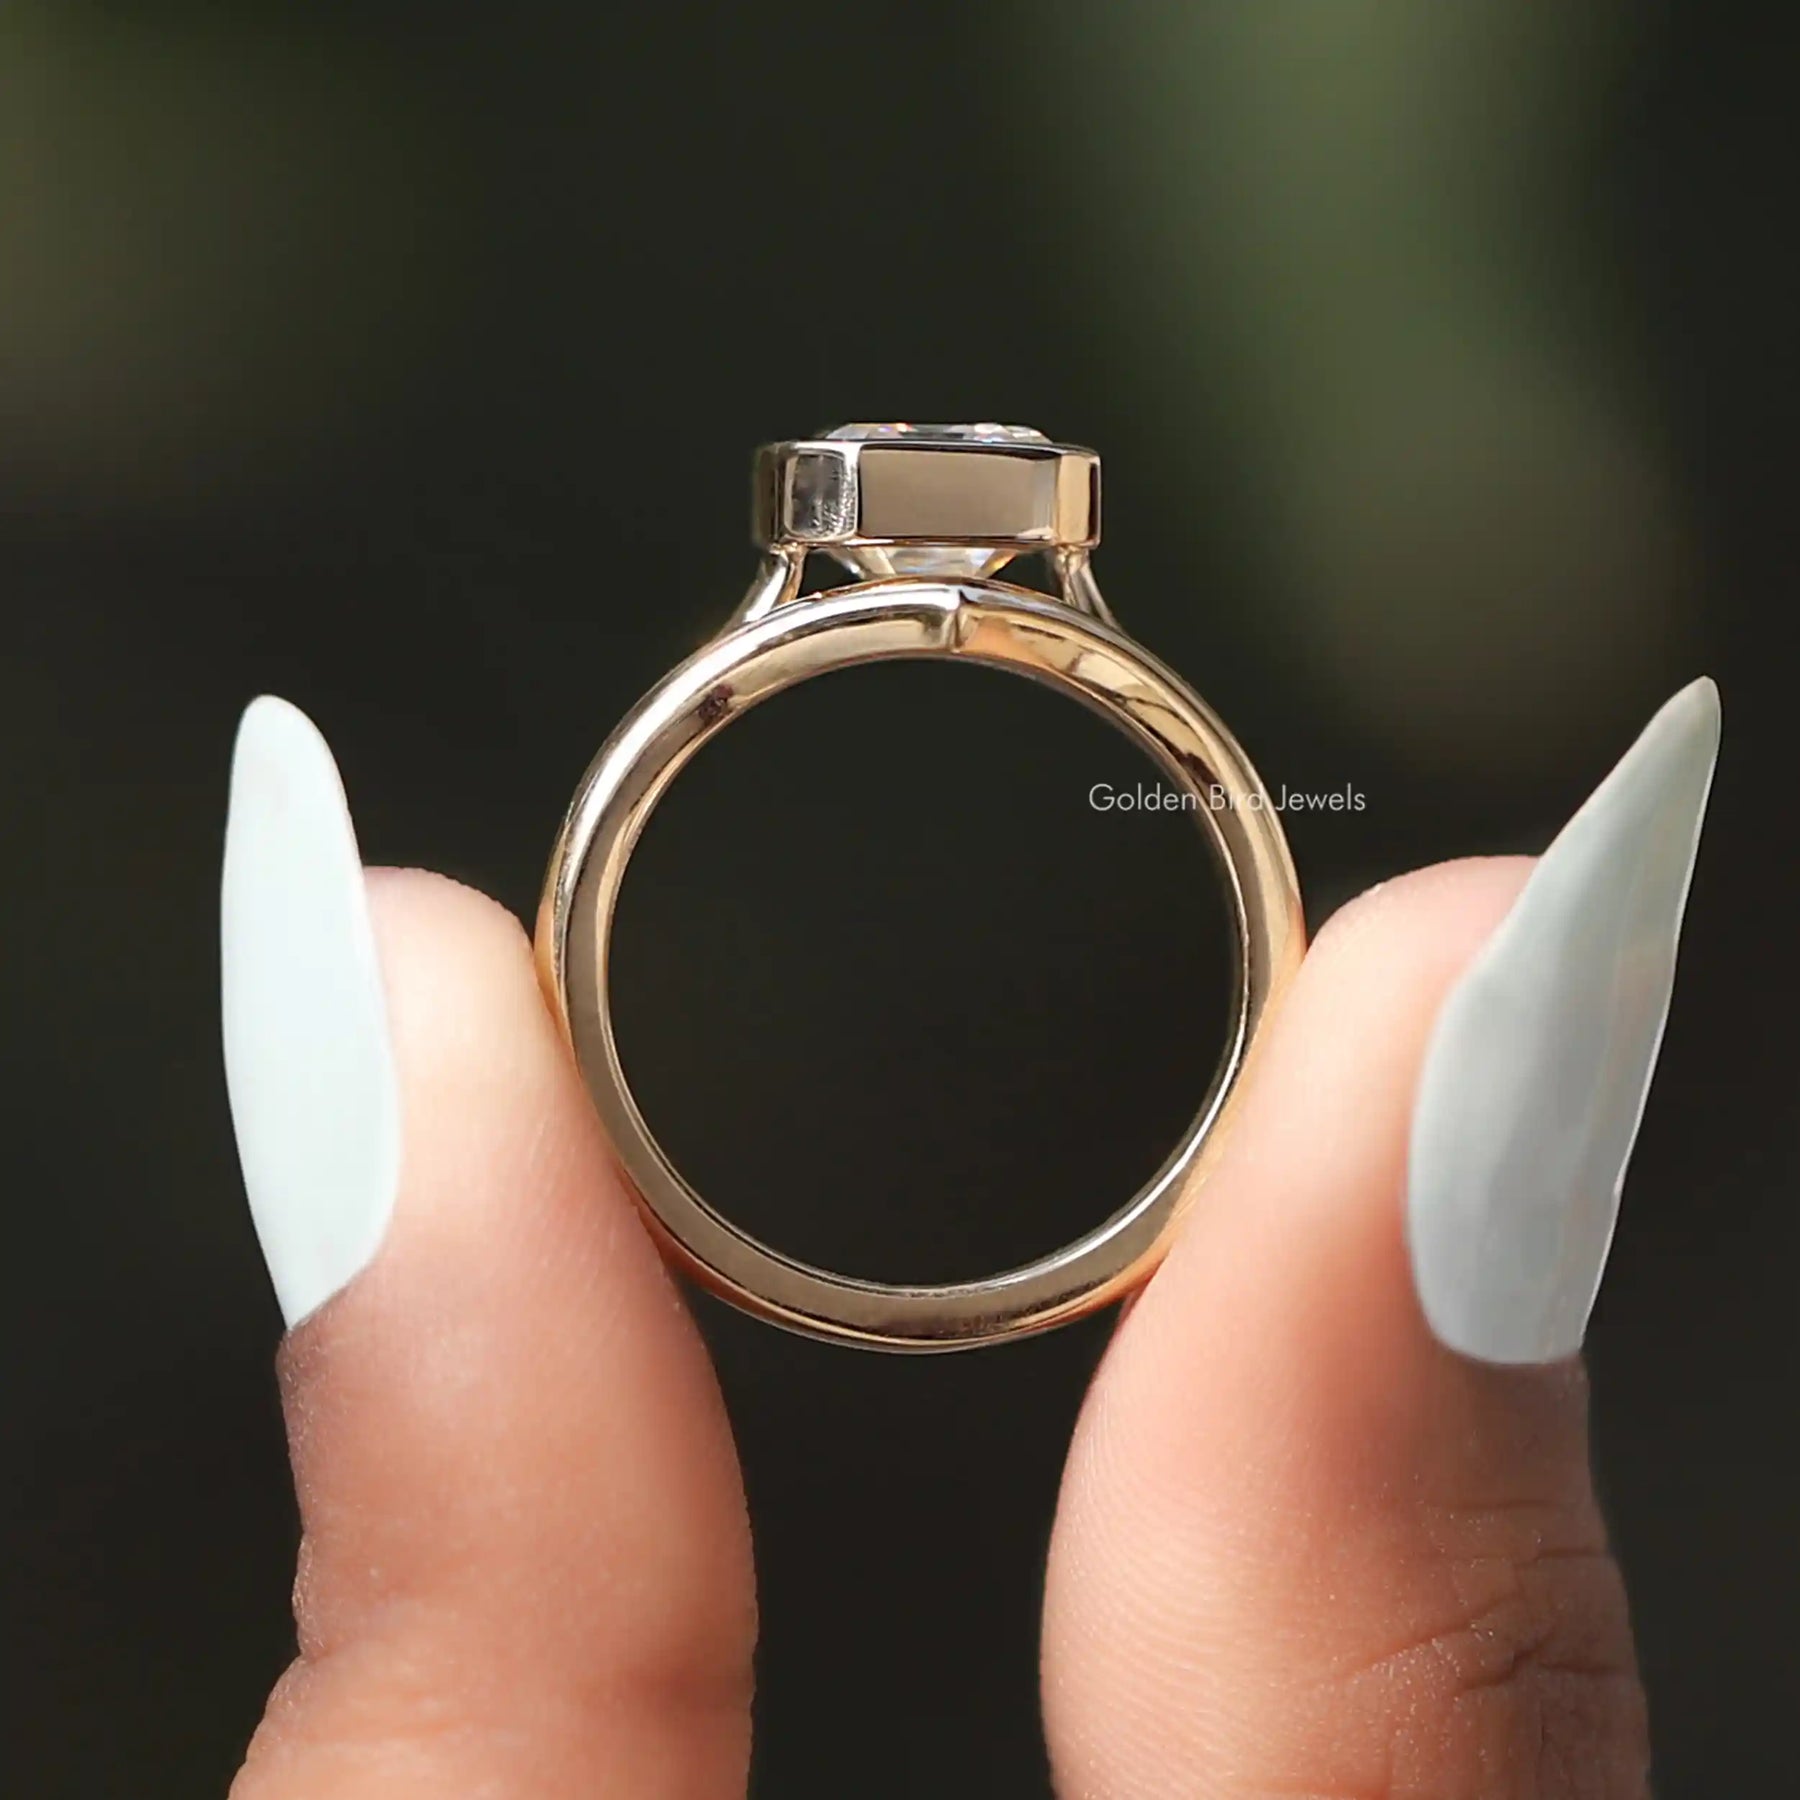 [This emerald cut ring made of bezel setting]-[Golden Bird Jewels]